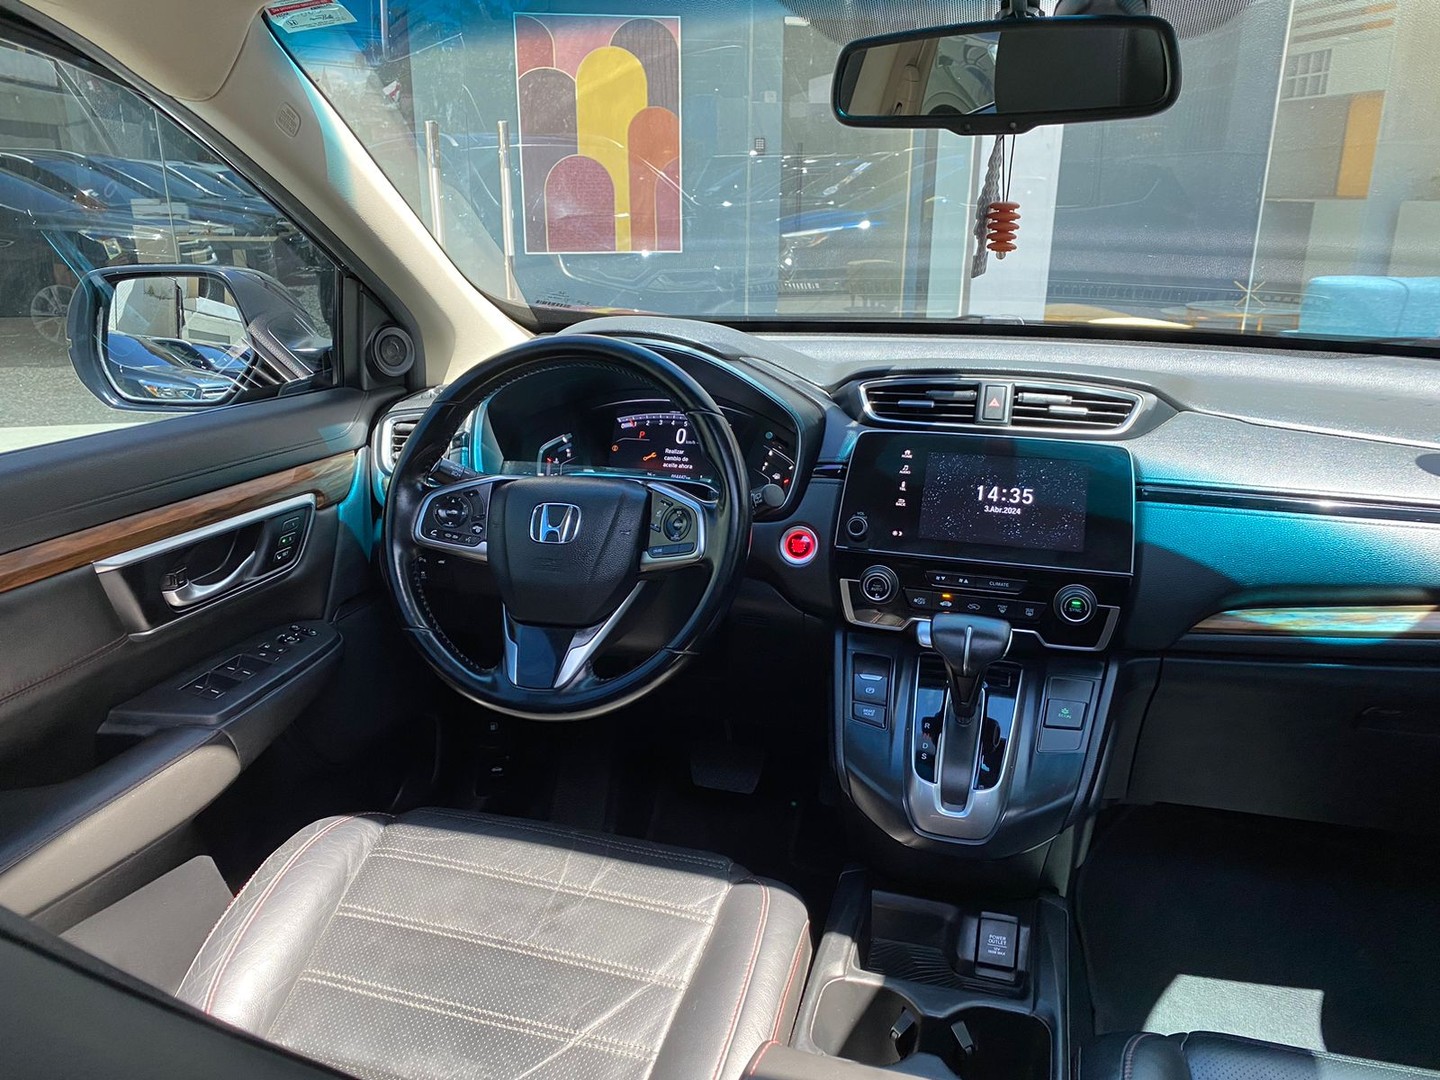 jeepetas y camionetas - Honda CR-V Touring 2019
Importada por Agencia Bella
70,000 KM 8